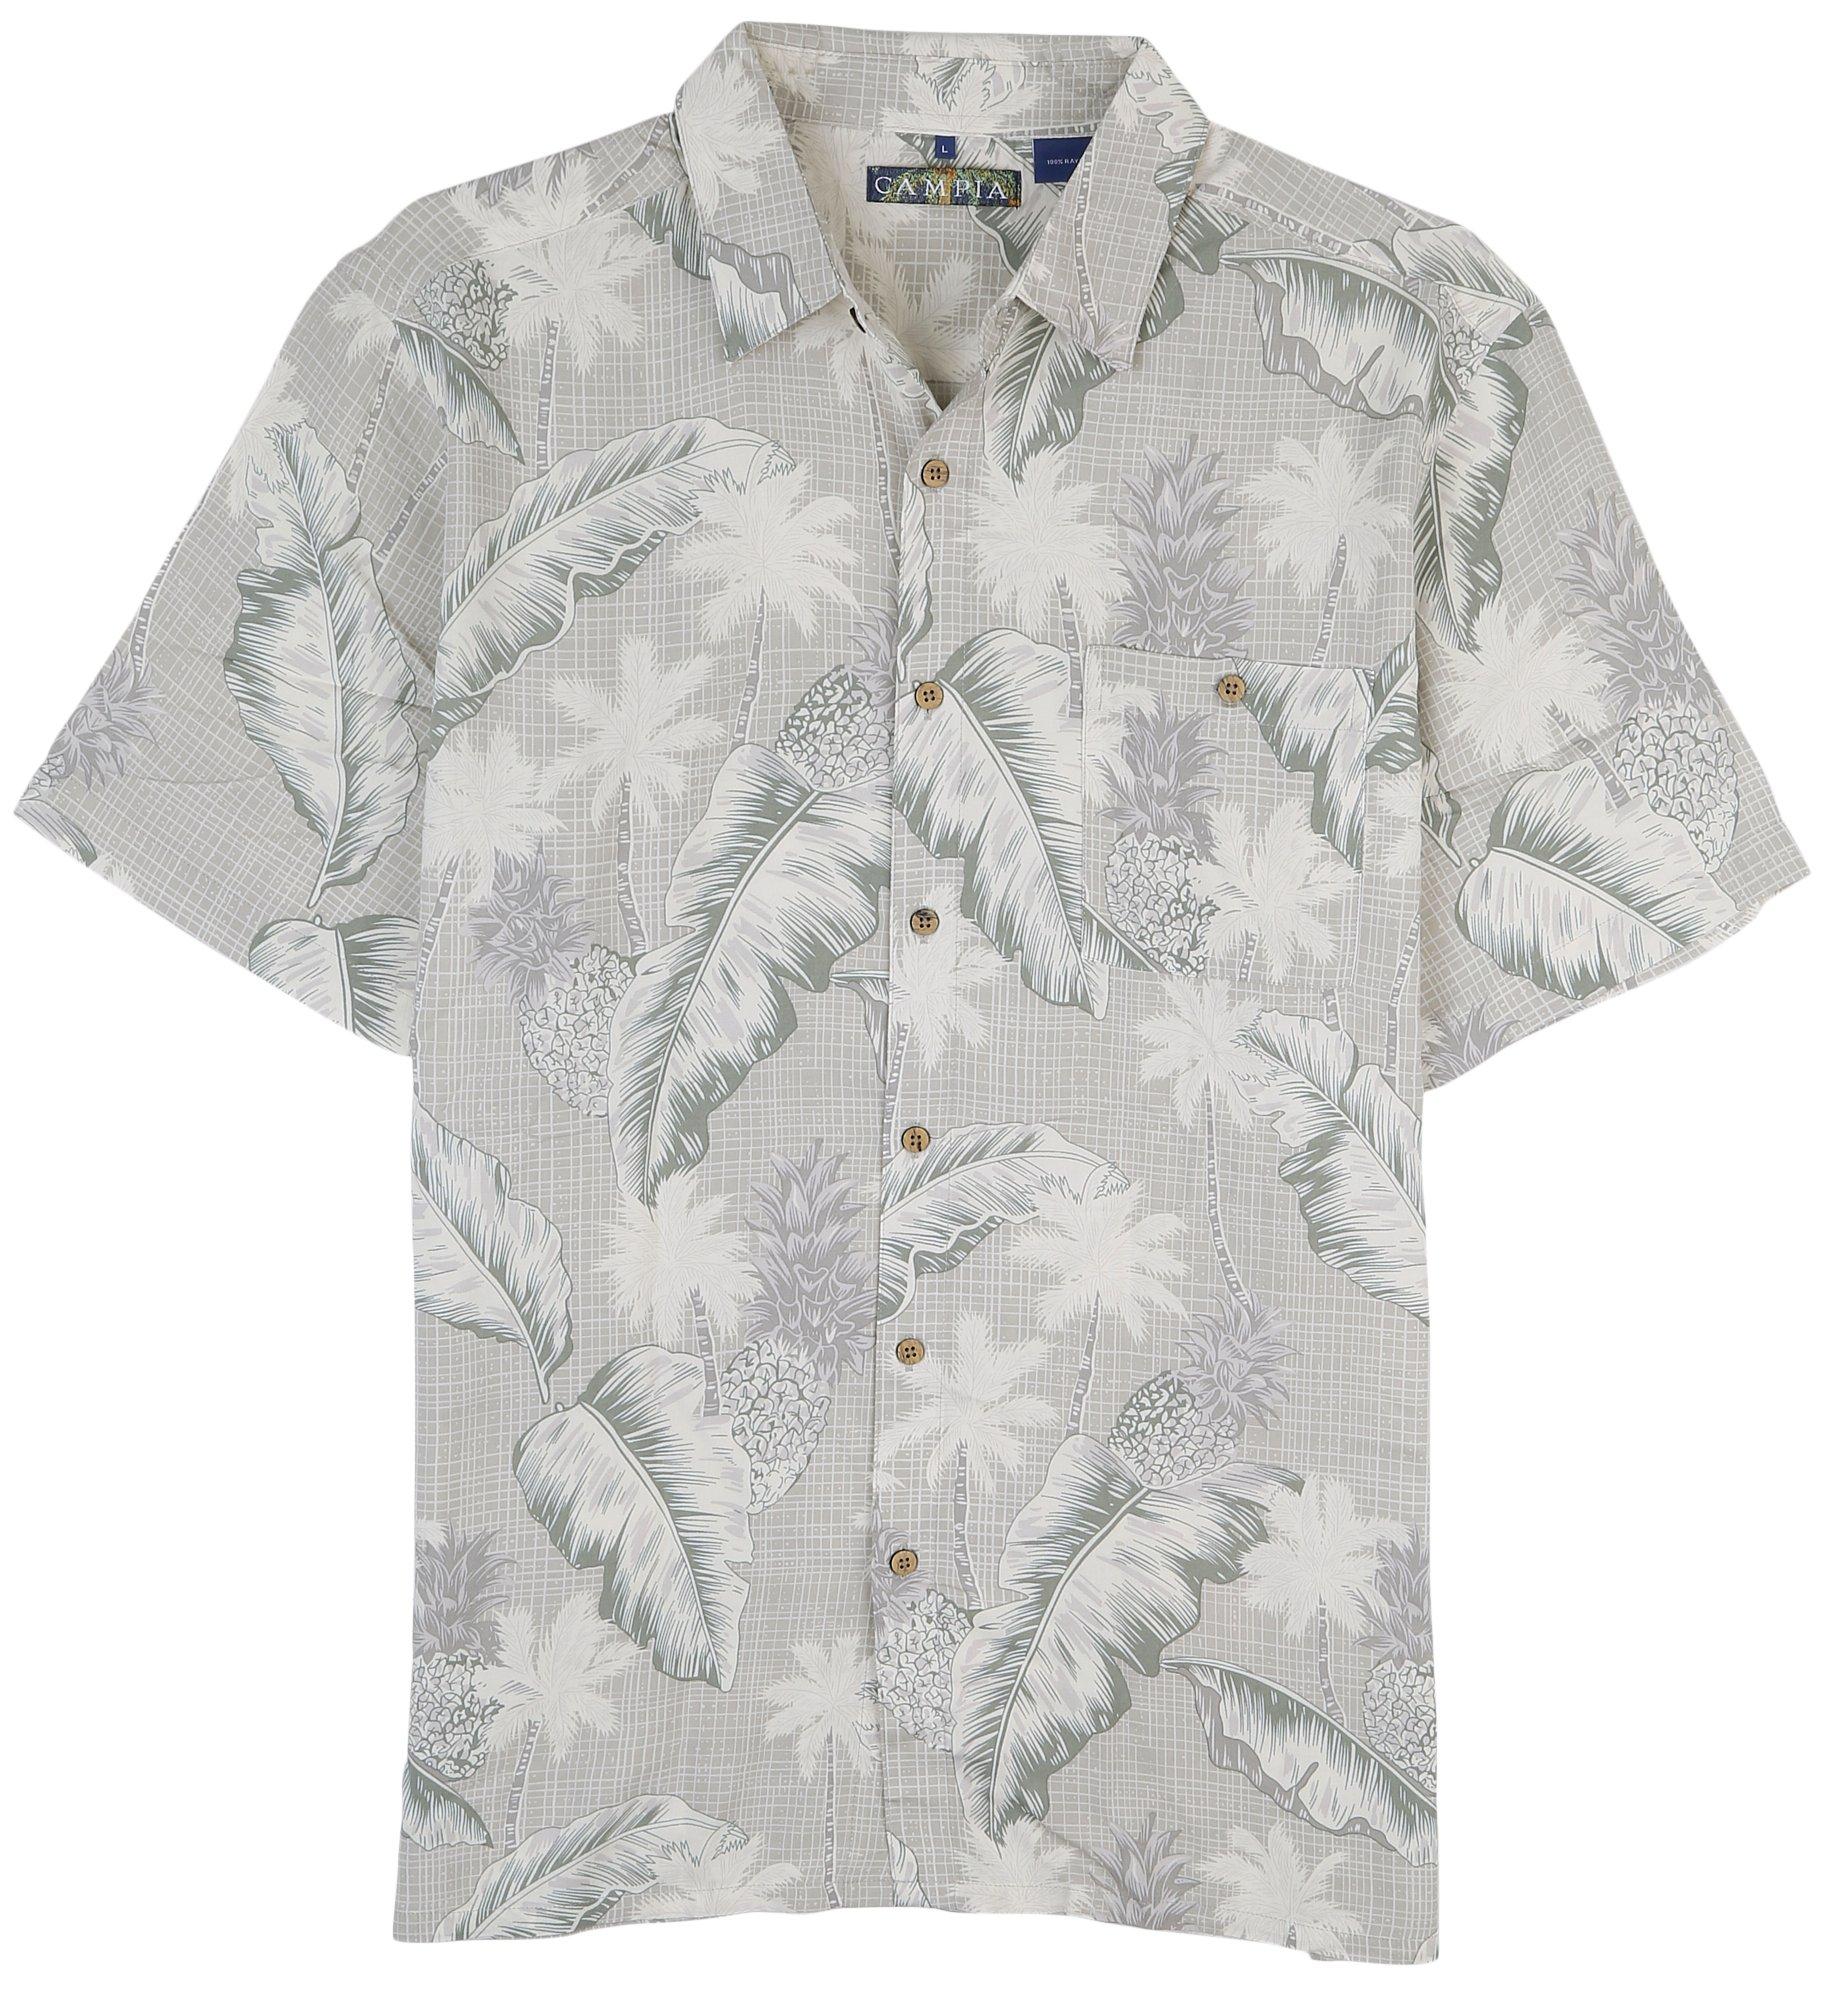 Mens Tropical Leaves Print Short Sleeve Shirt